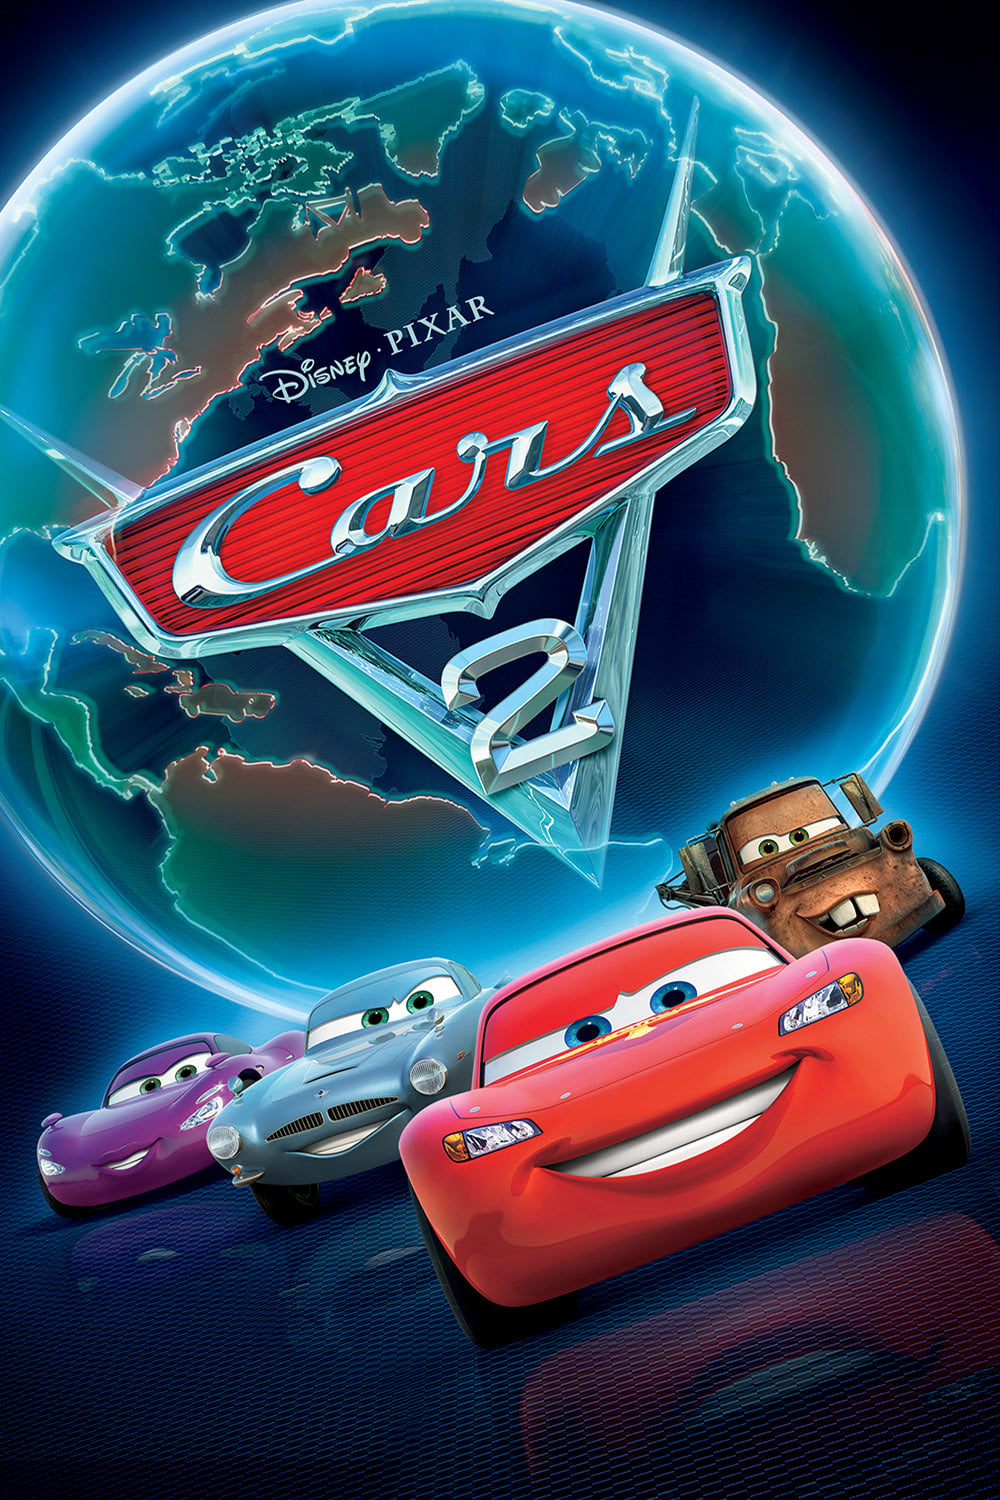 Affiche du film "Cars 2"